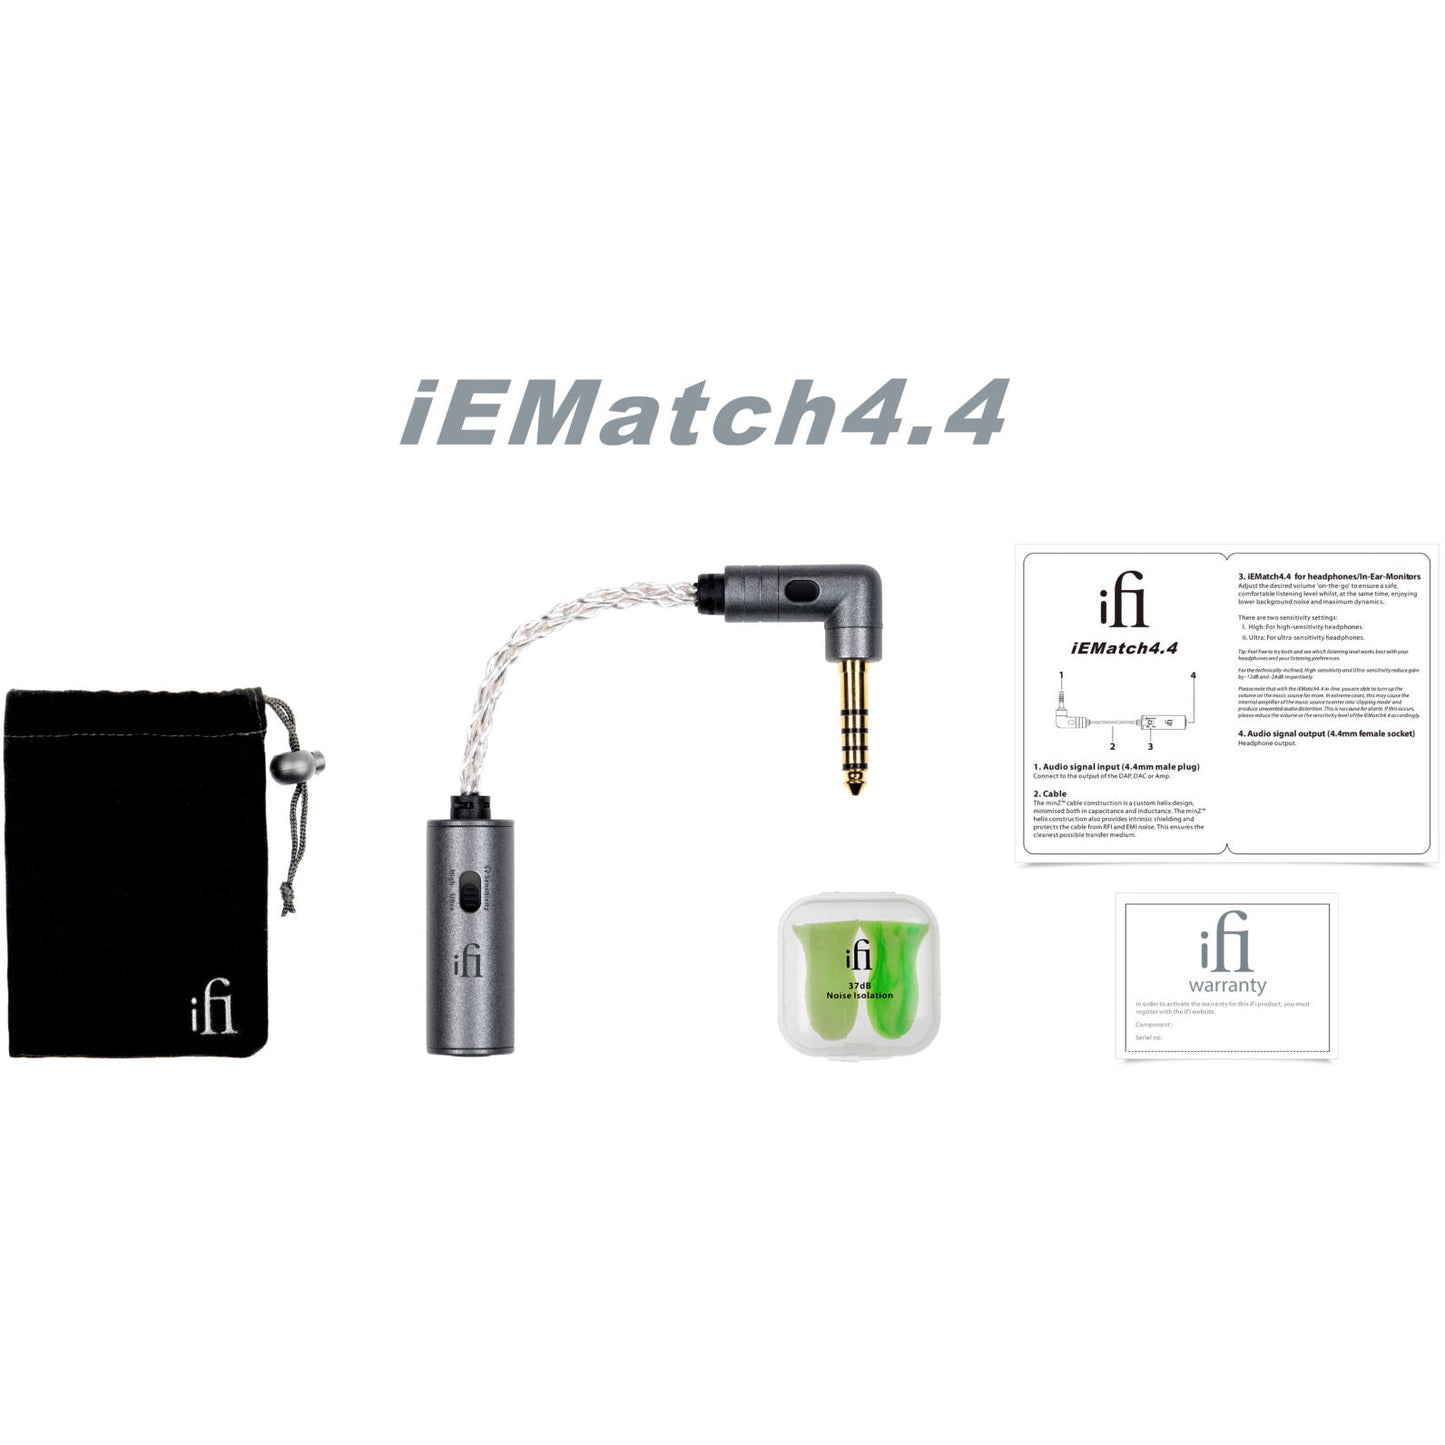 Ifi iEMatch 4.4